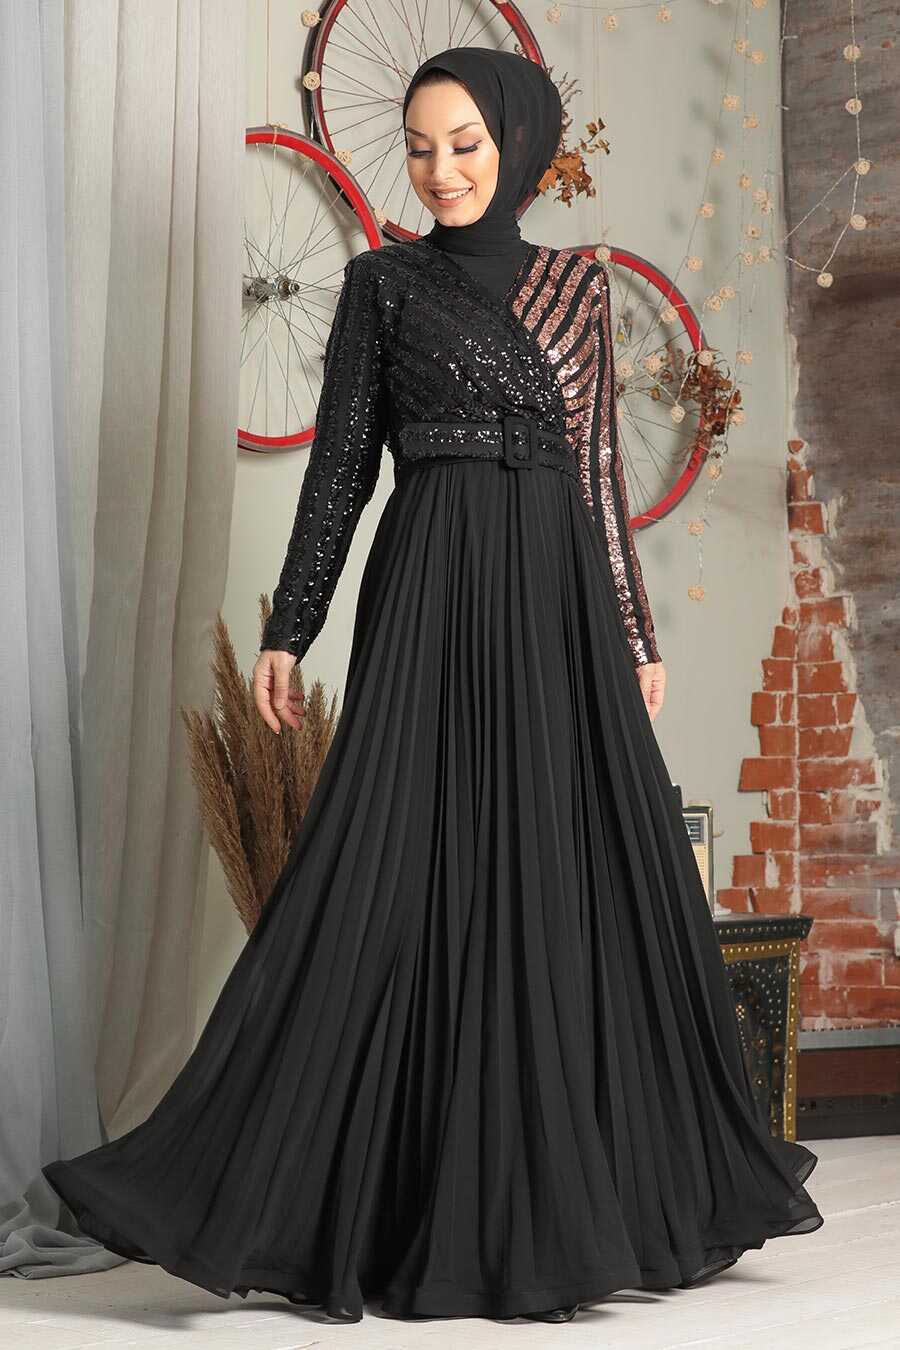 Neva Style - Elegant Copper Islamic Prom Dress 33130BKR - Neva-style.com